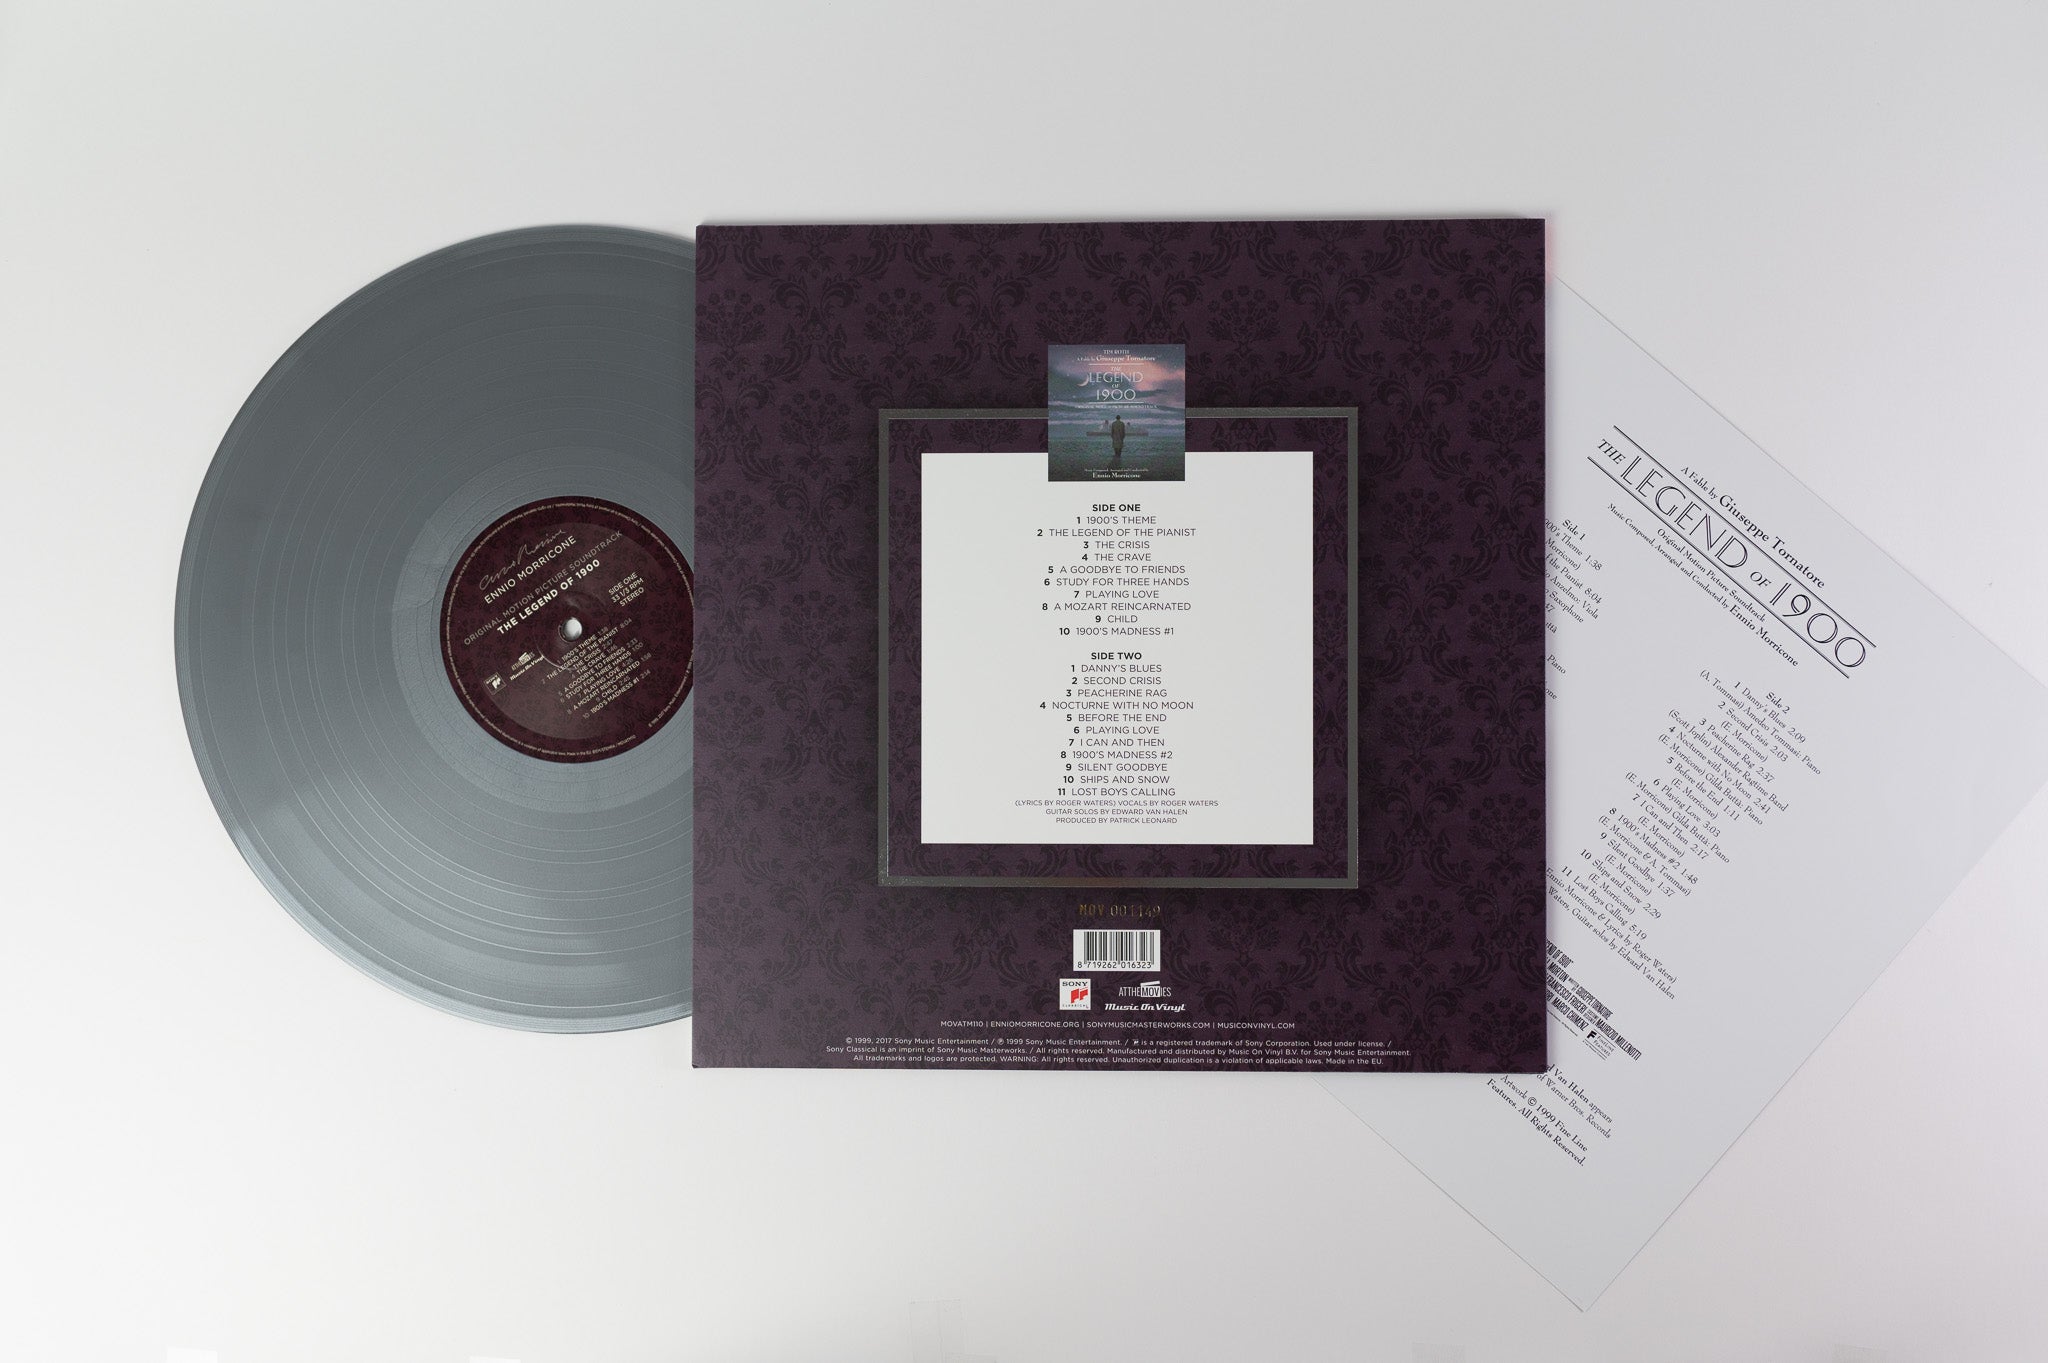 Ennio Morricone - The Legend Of 1900 (Original Soundtrack) on Music on Vinyl Ltd Numbered Silver Reissue